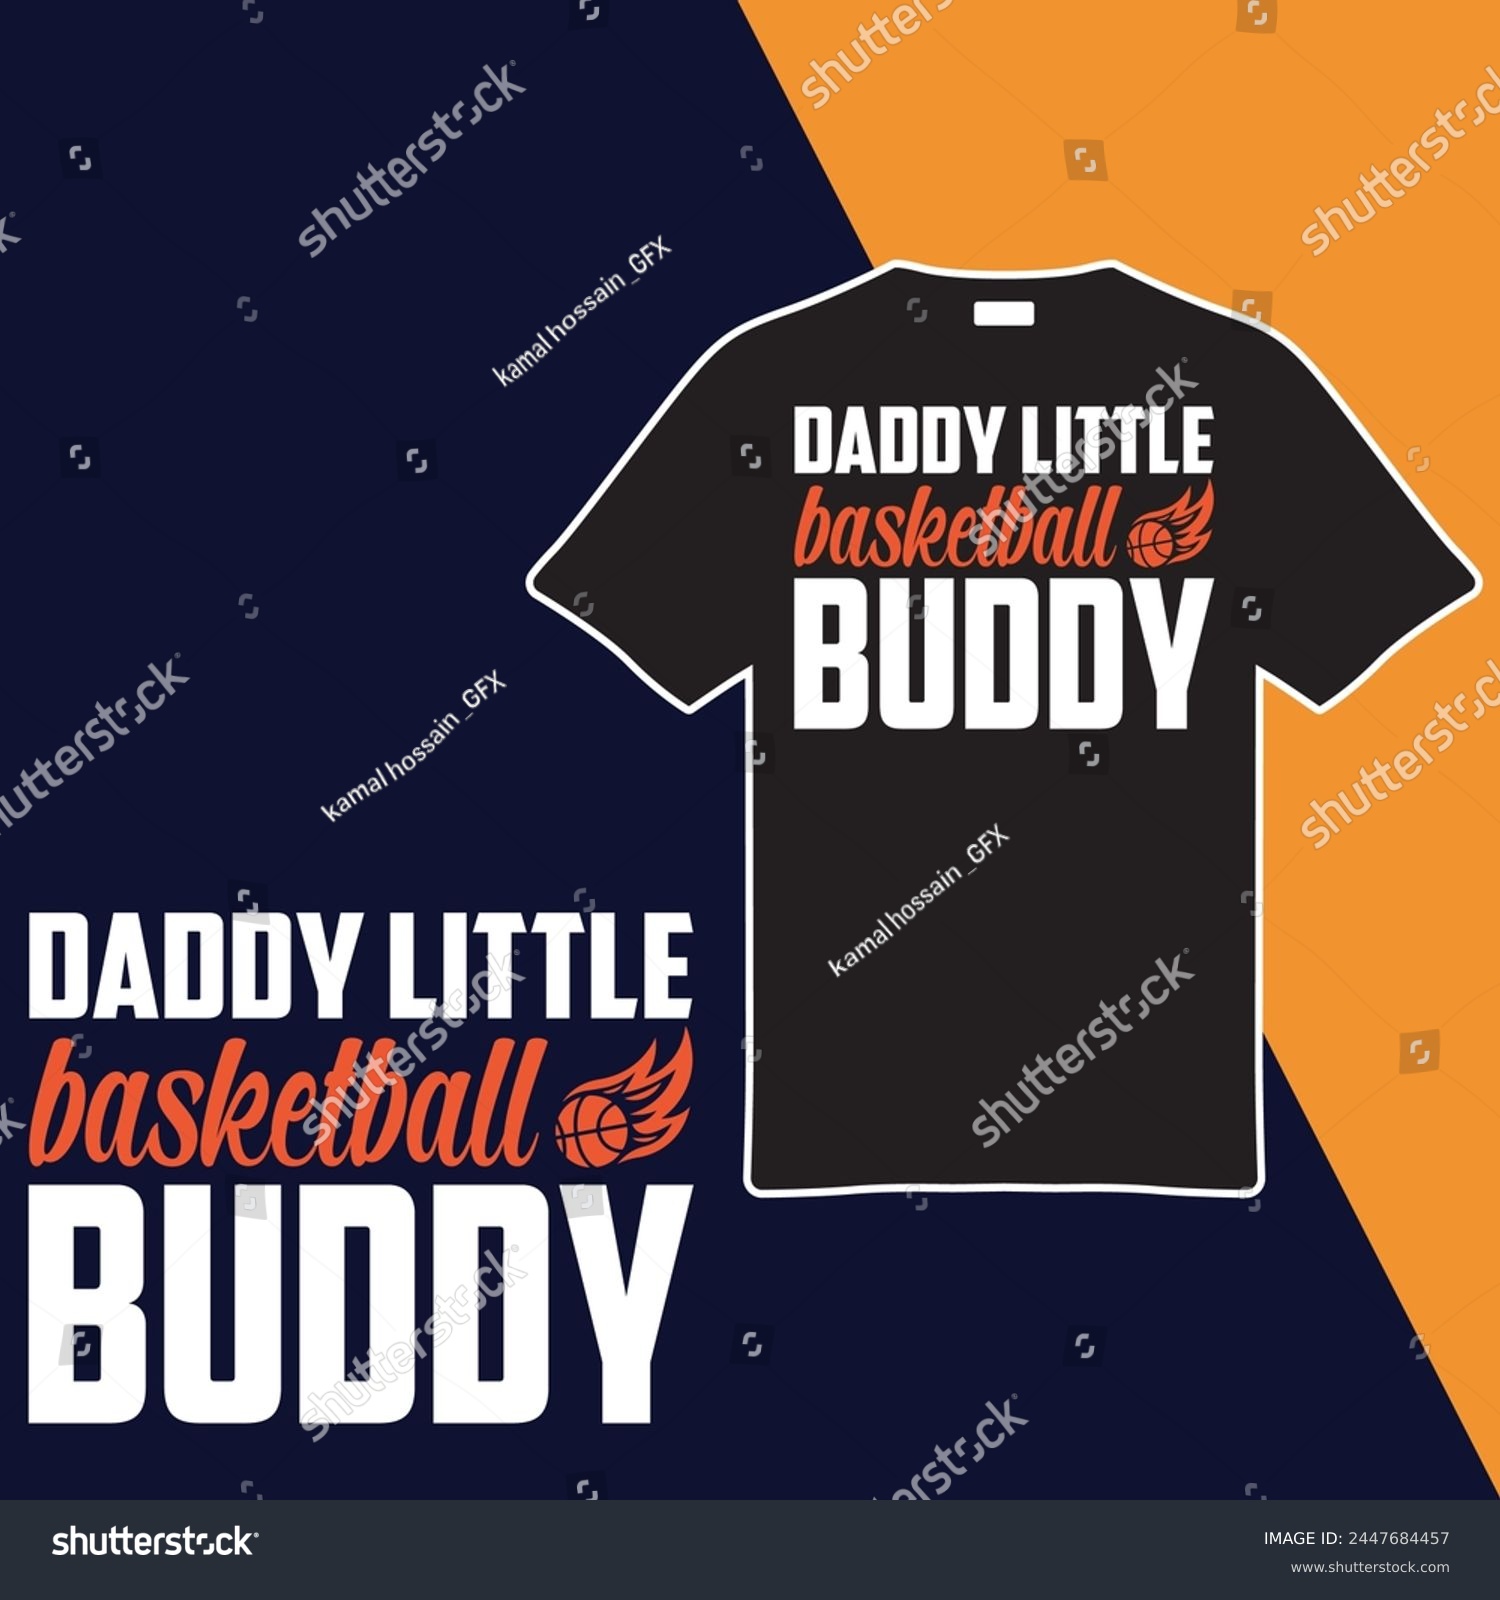 SVG of Daddy Little Basketball Buddy t-shirt design. vector illustration svg